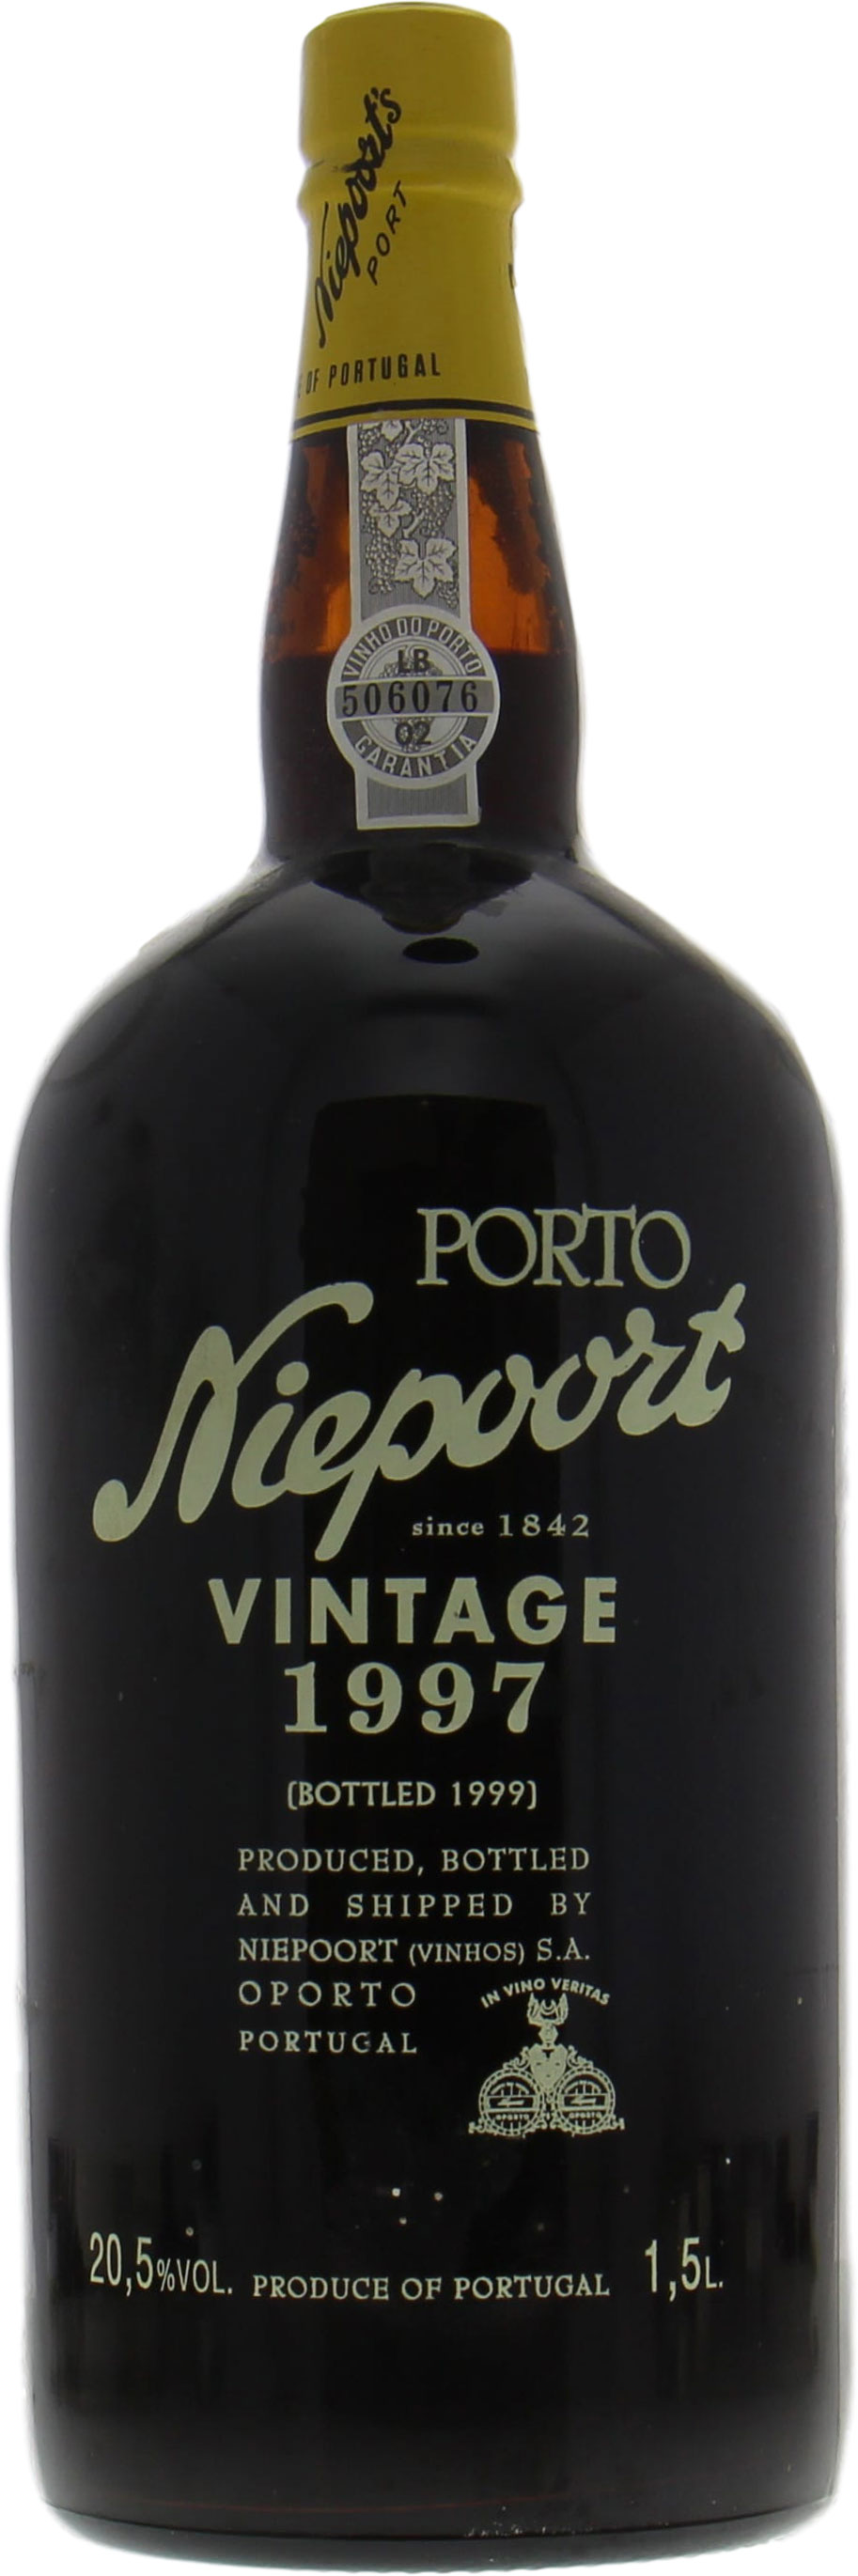 Niepoort - Vintage Port 1997 Perfect